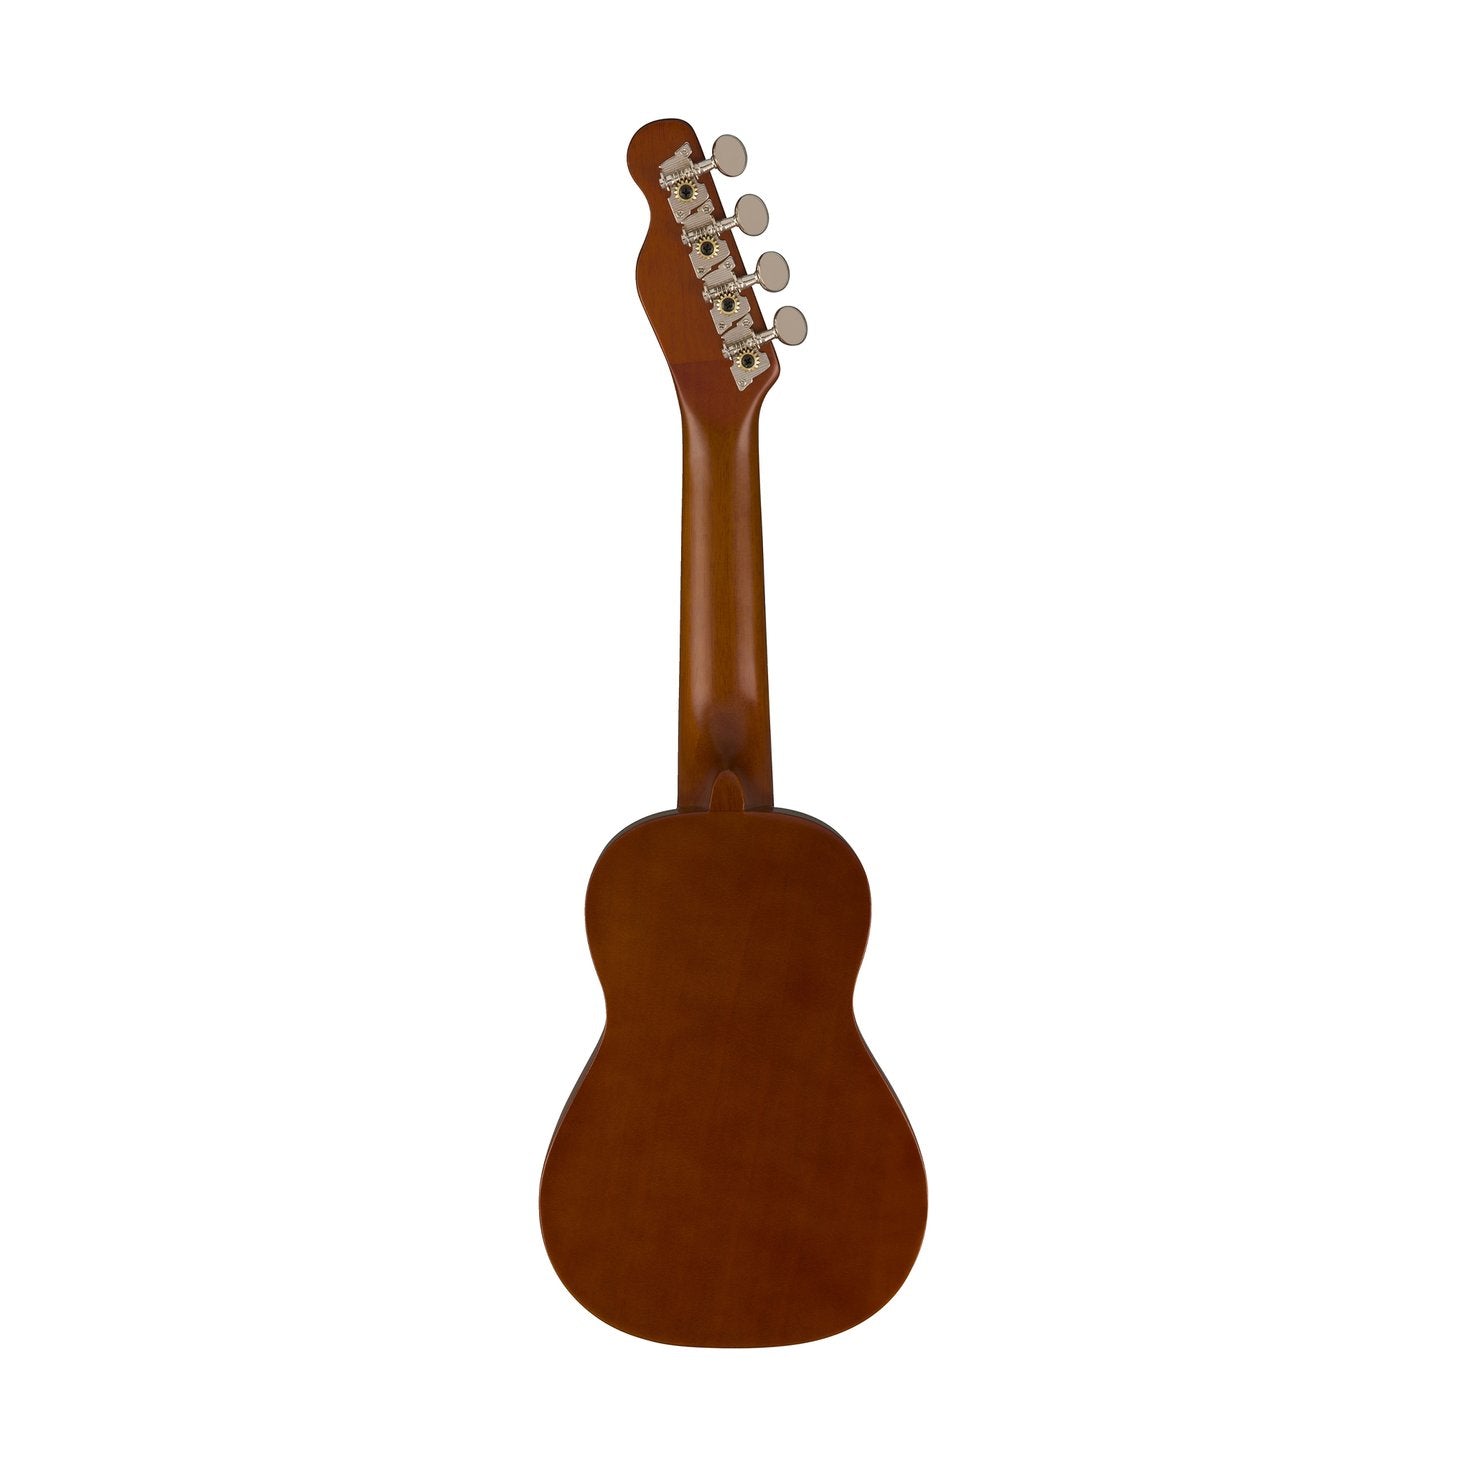 Fender Venice Soprano Ukulele, Walnut FB, Natural, FENDER, UKULELE, fender-ukulele-f03-097-1610-722, ZOSO MUSIC SDN BHD